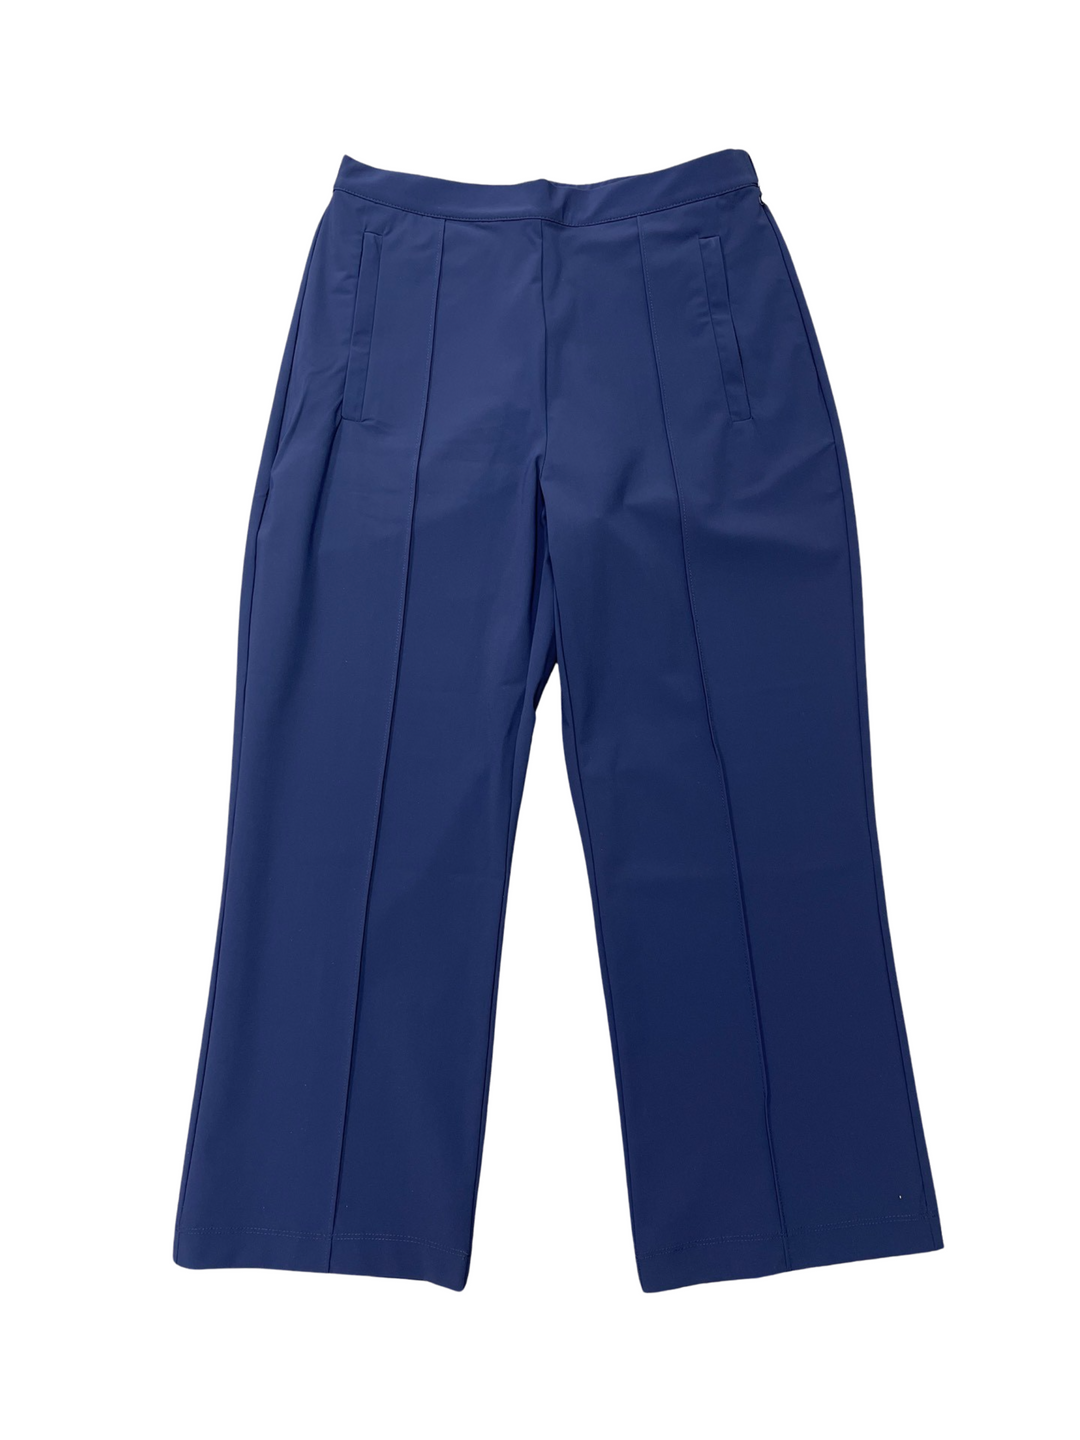 Kinona Tailored Crop Pants - Navy - Size Small - Skorzie